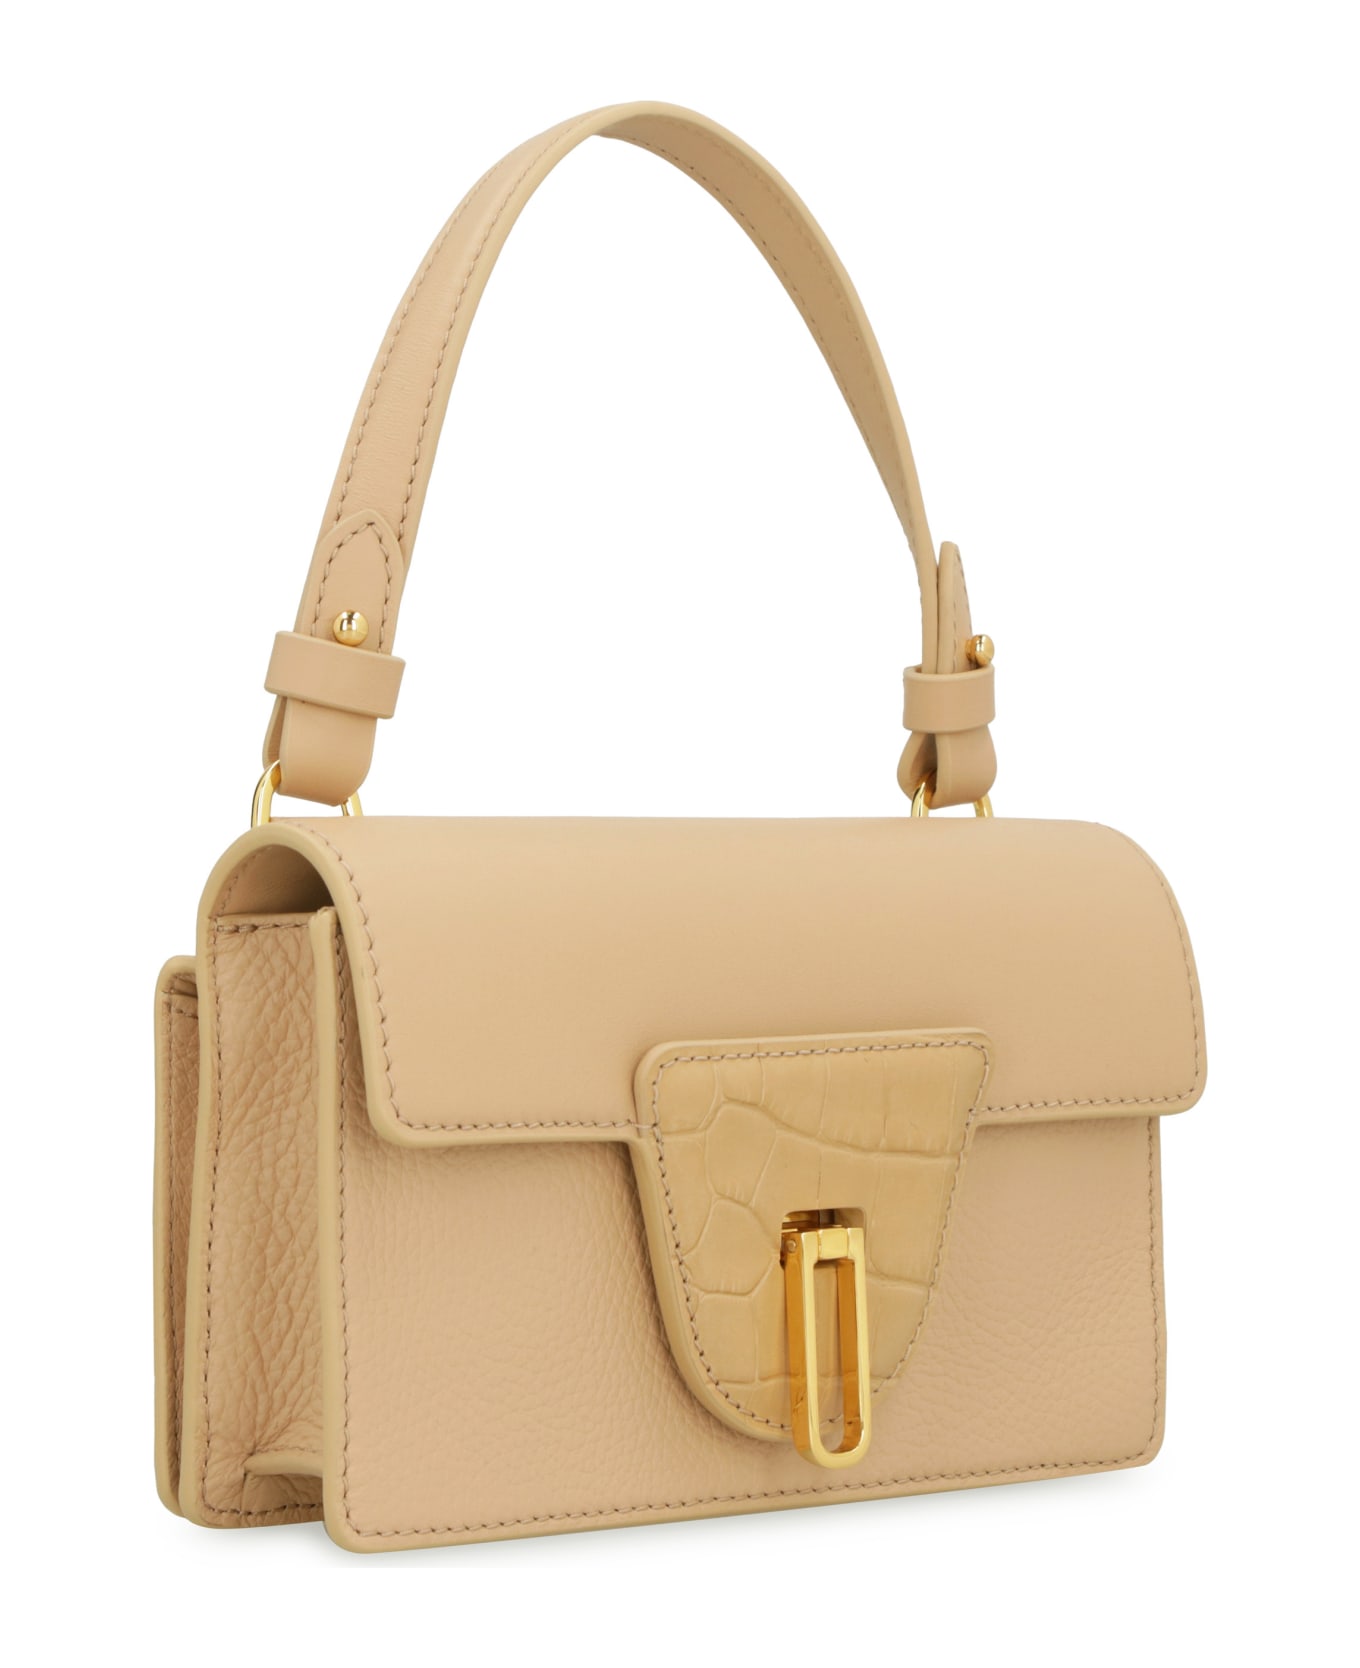 Coccinelle Nico Leather Handbag - Beige